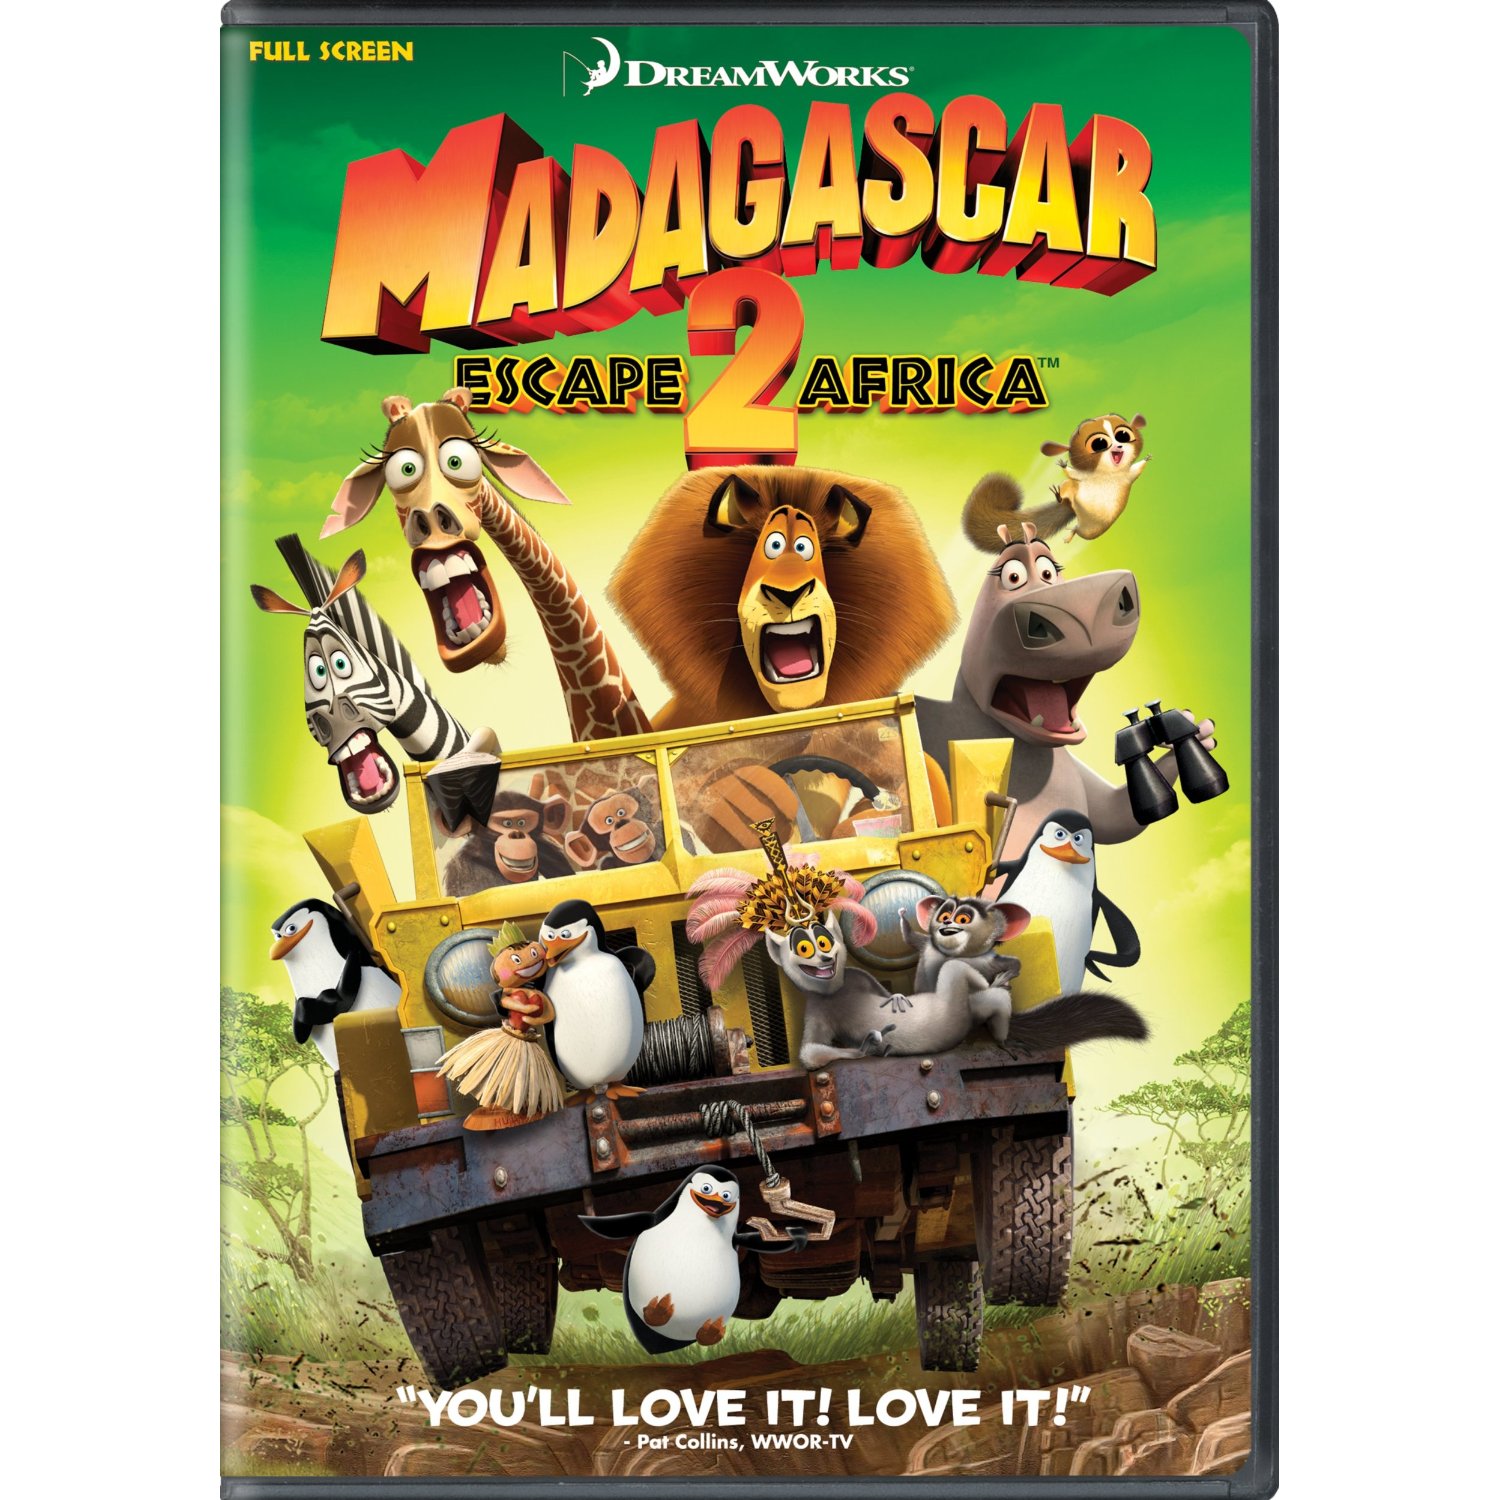 High Resolution Wallpaper | Madagascar: Escape 2 Africa 1500x1500 px